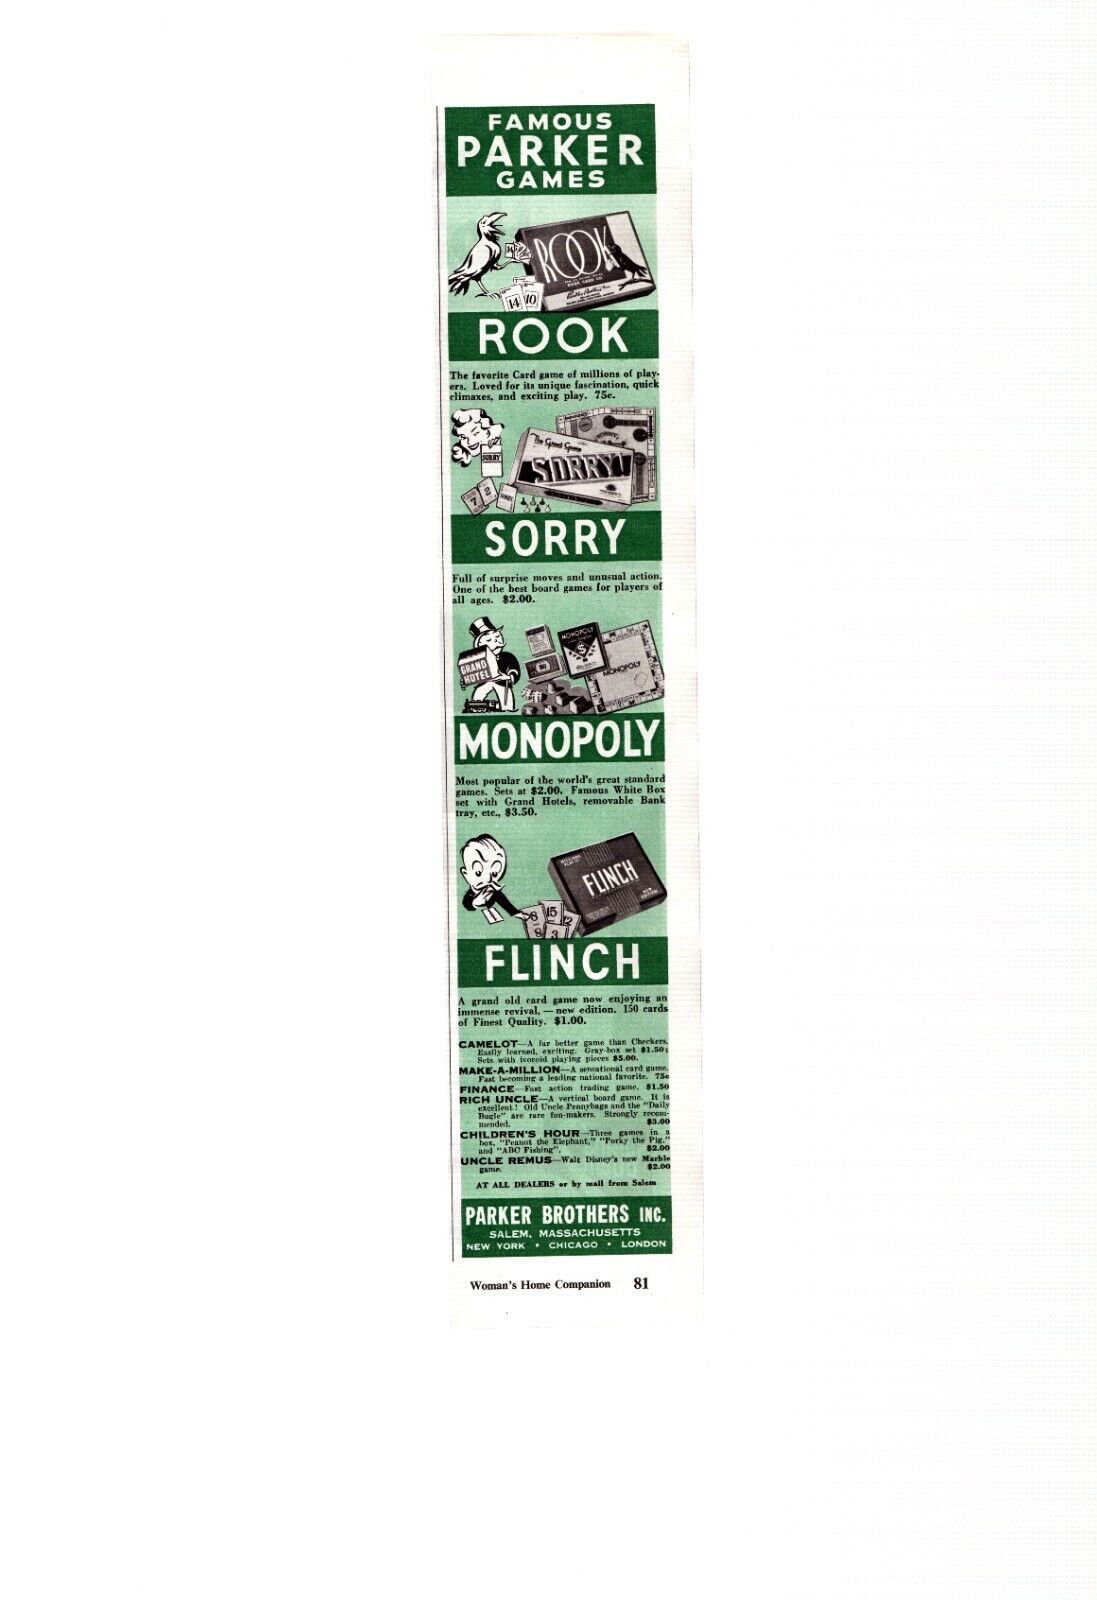 Vintage Print Ad 1947 Parker Brothers Games Rook Sorry Monopoly Flinch Salem MA